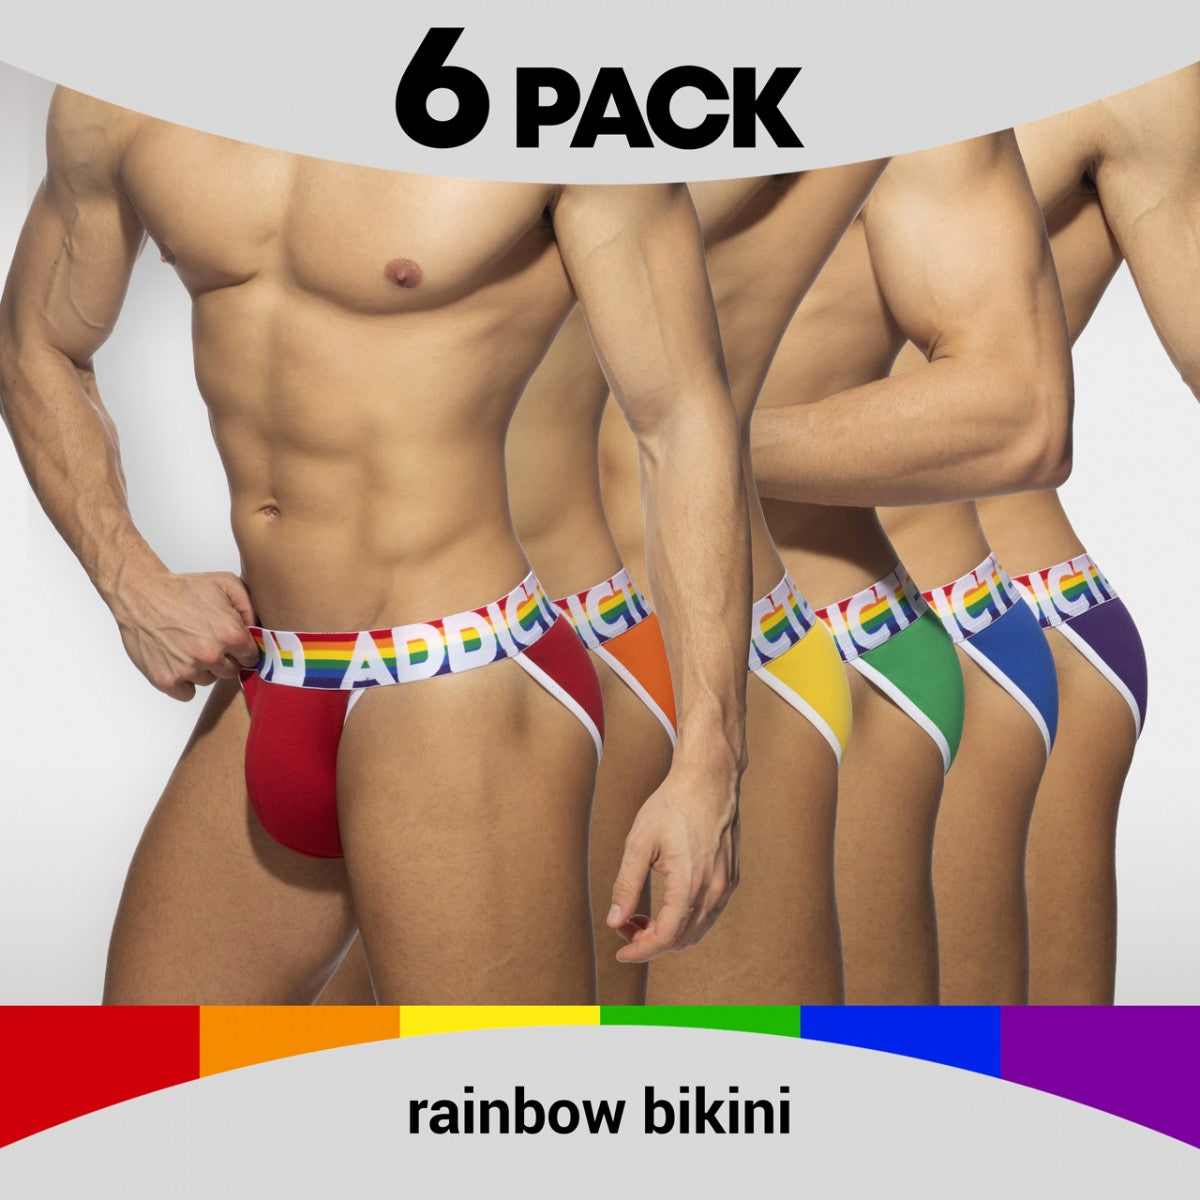 6 PACK RAINBOW BIKINI - DealByEthan.gay